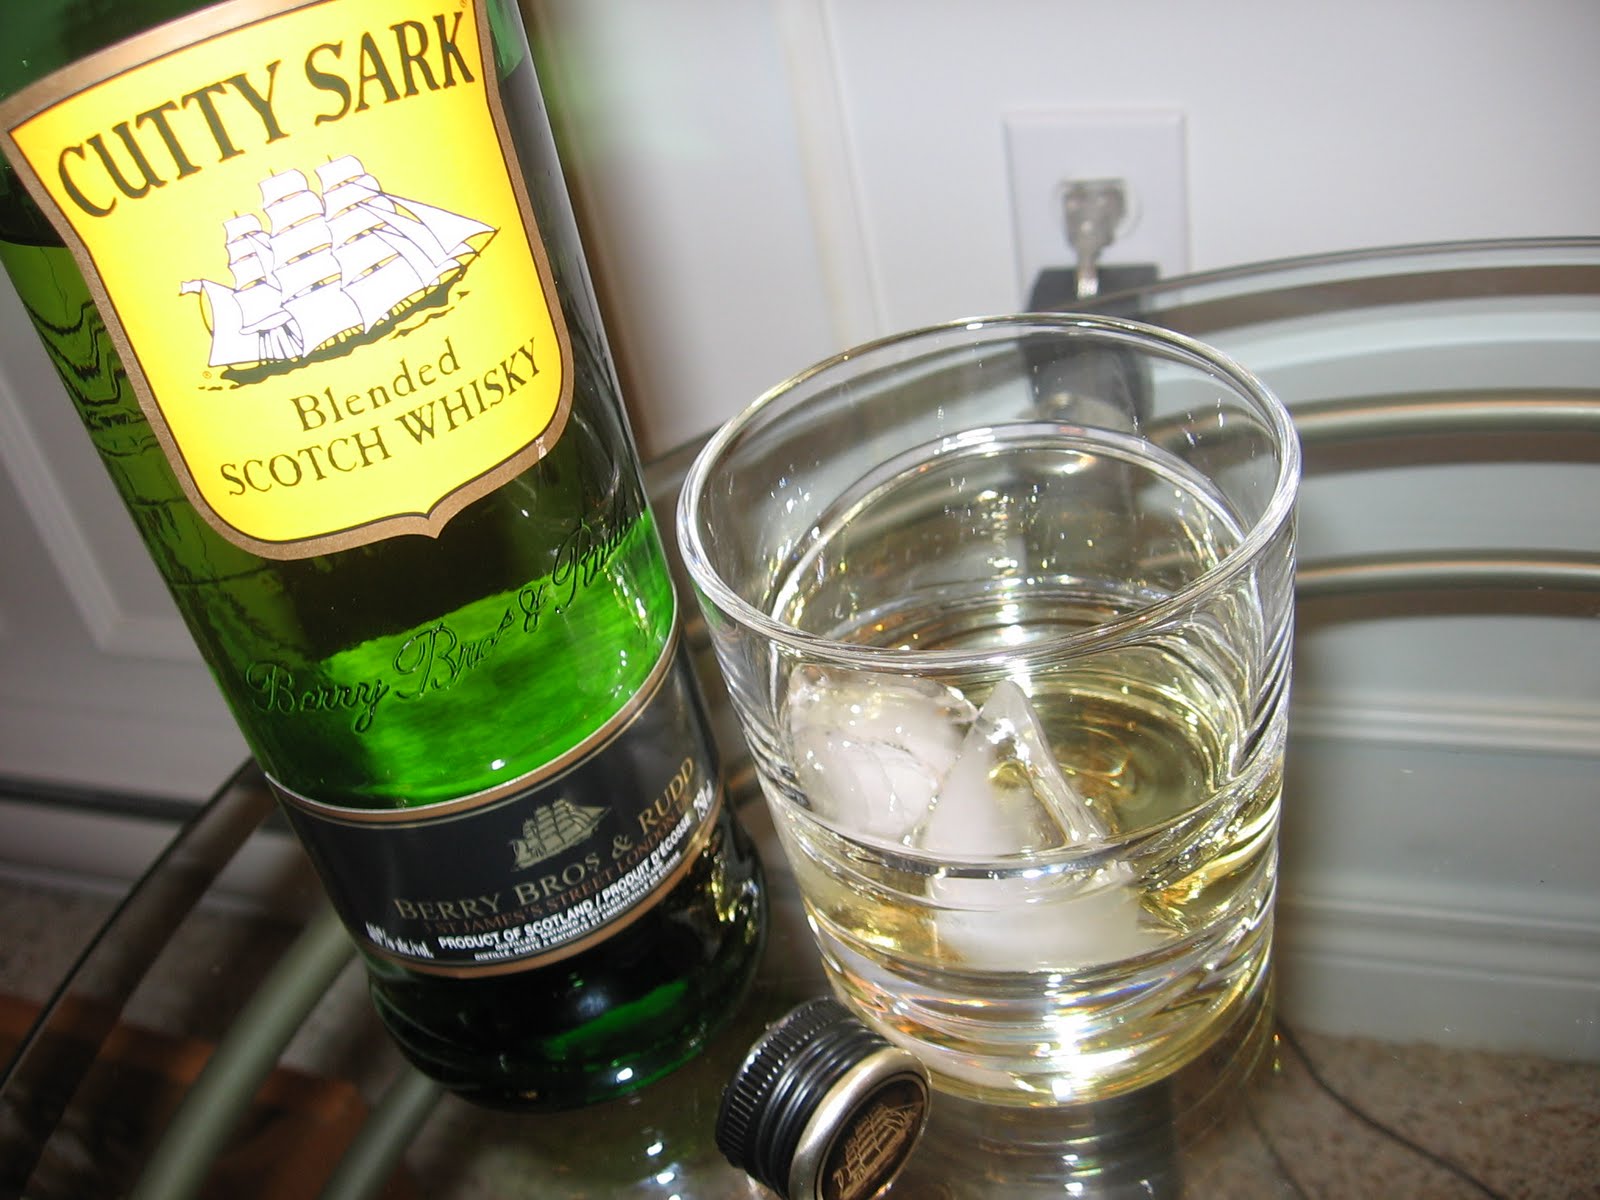 Jason S Scotch Whisky Reviews Review Cutty Sark Blended Scotch Whisky